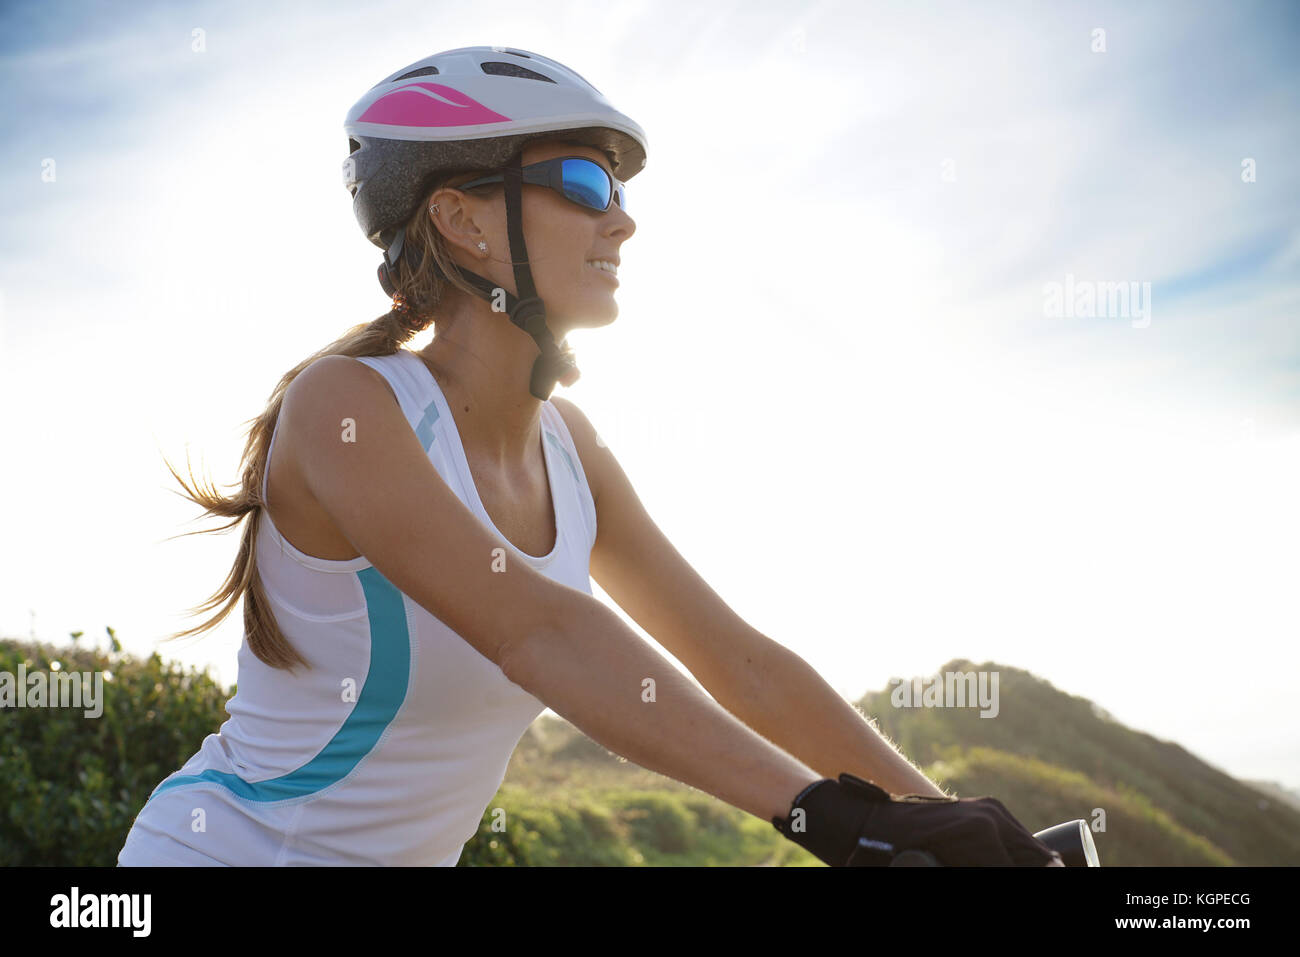 Frau im Sport Outfit Reiten Fahrrad auf Country Track Stockfoto